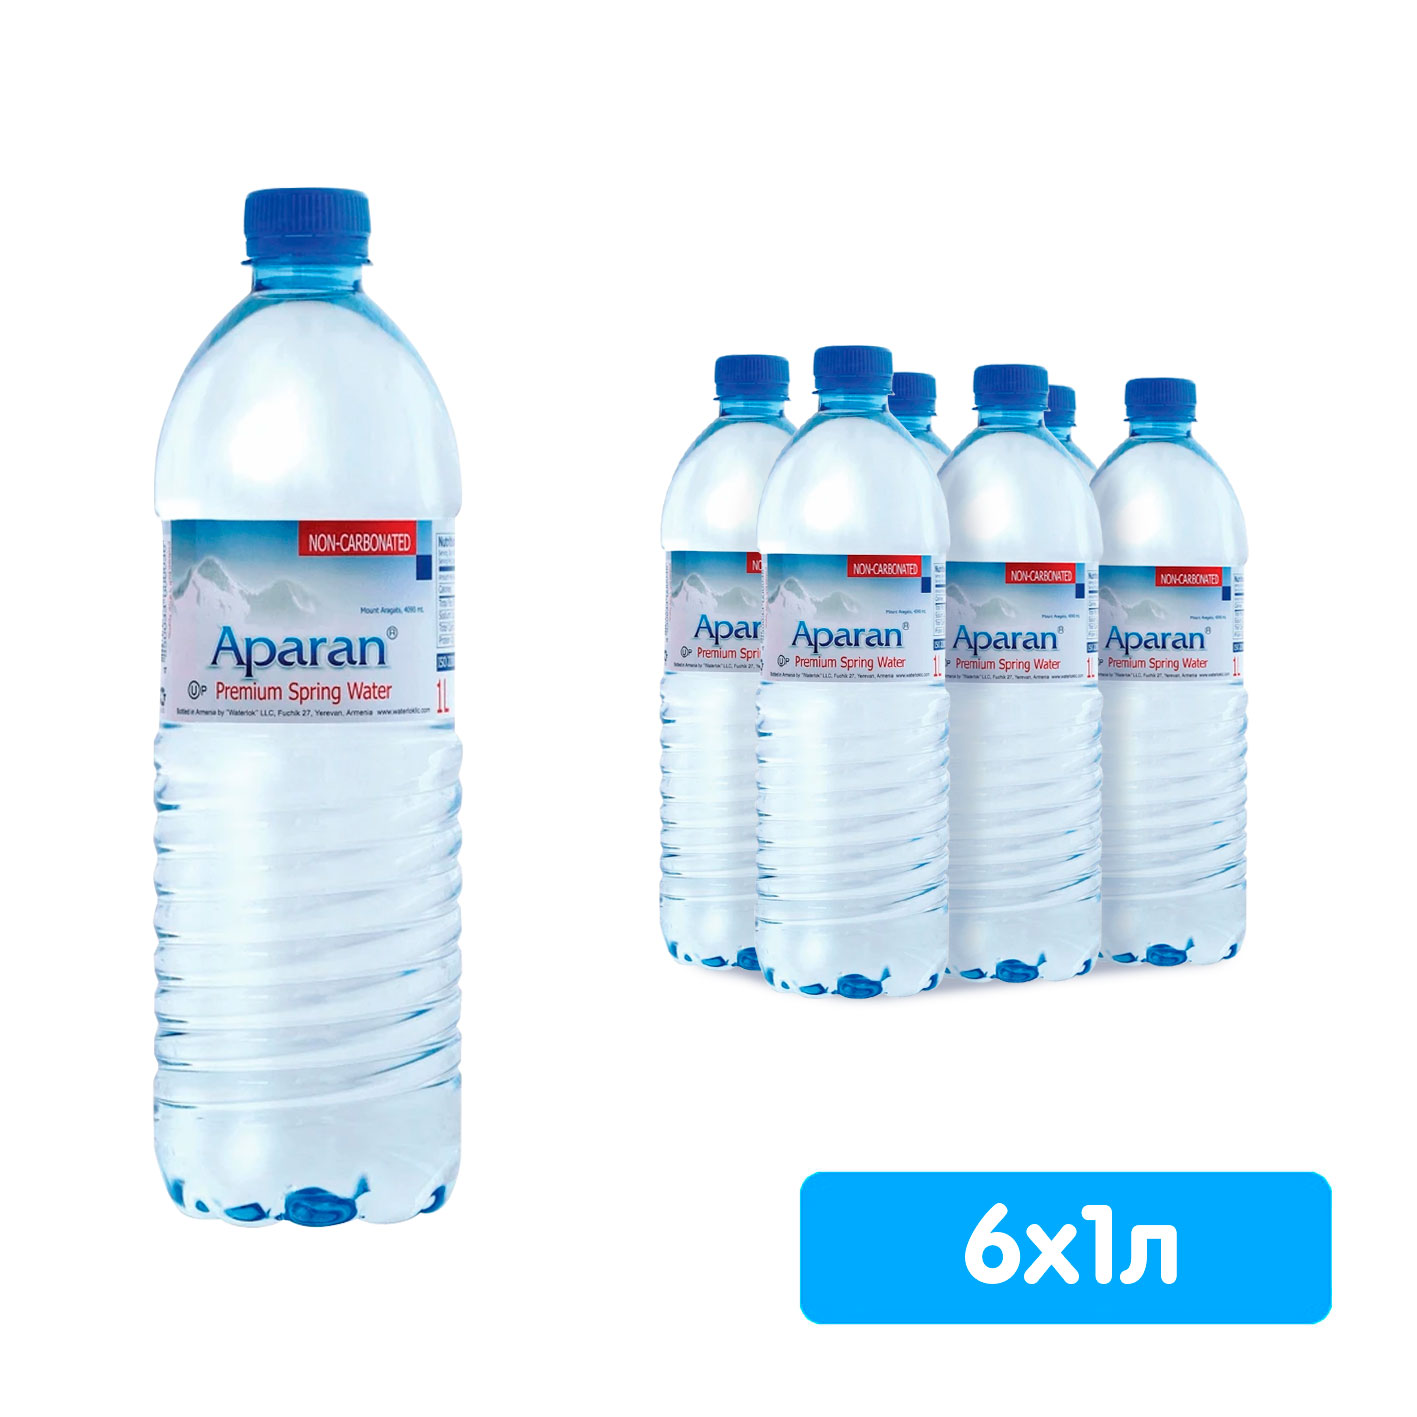 Вода Апаран 1 литр, без газа, пэт, 6 шт. в уп.